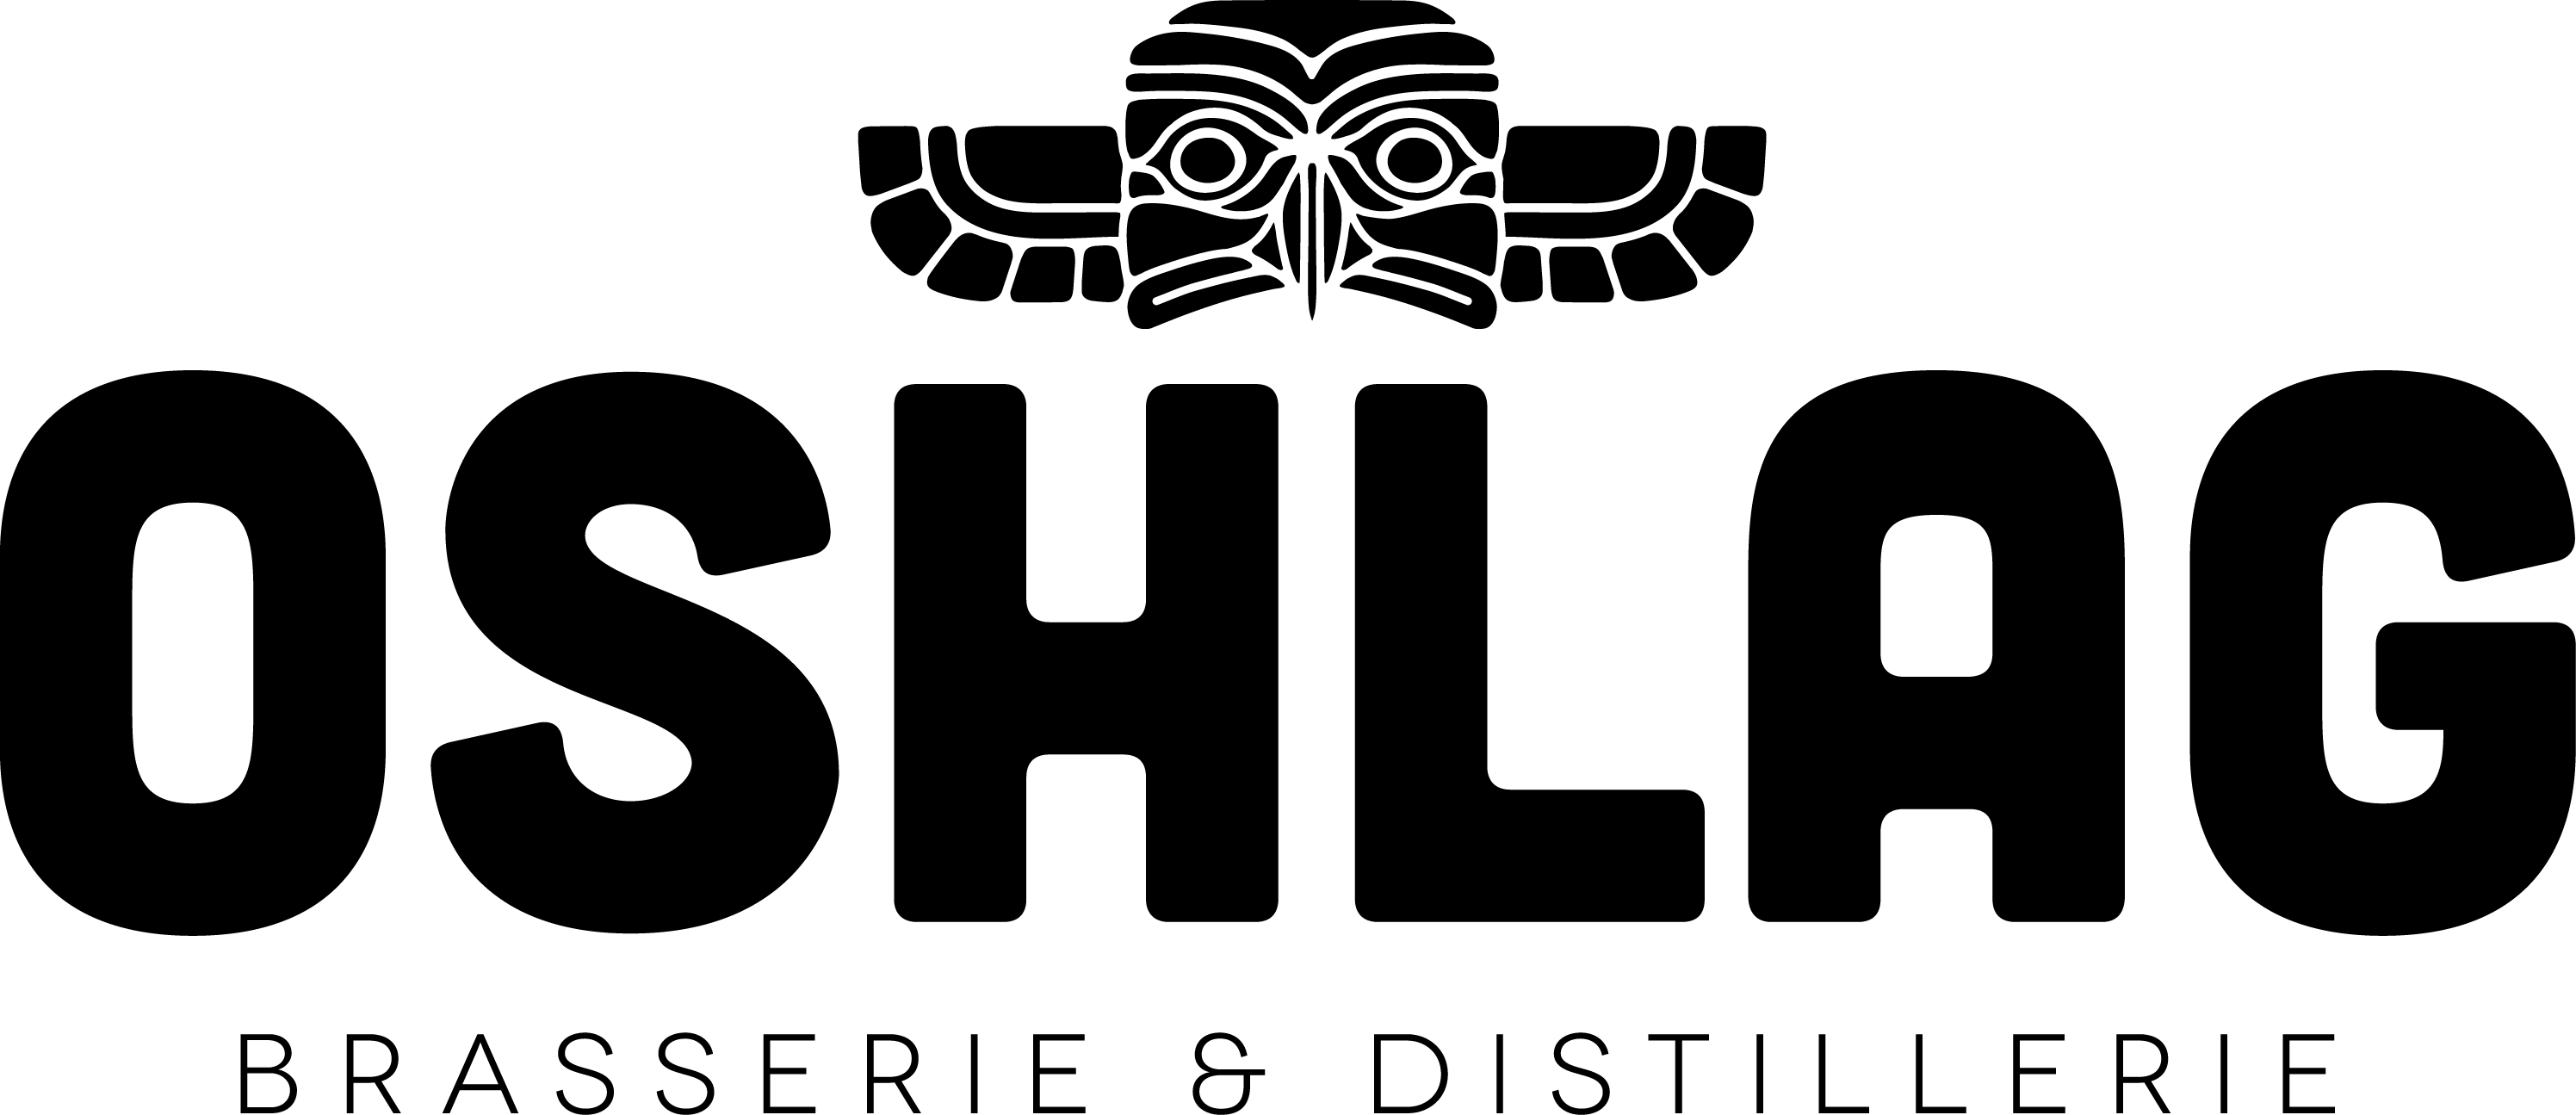 oshlag_logo